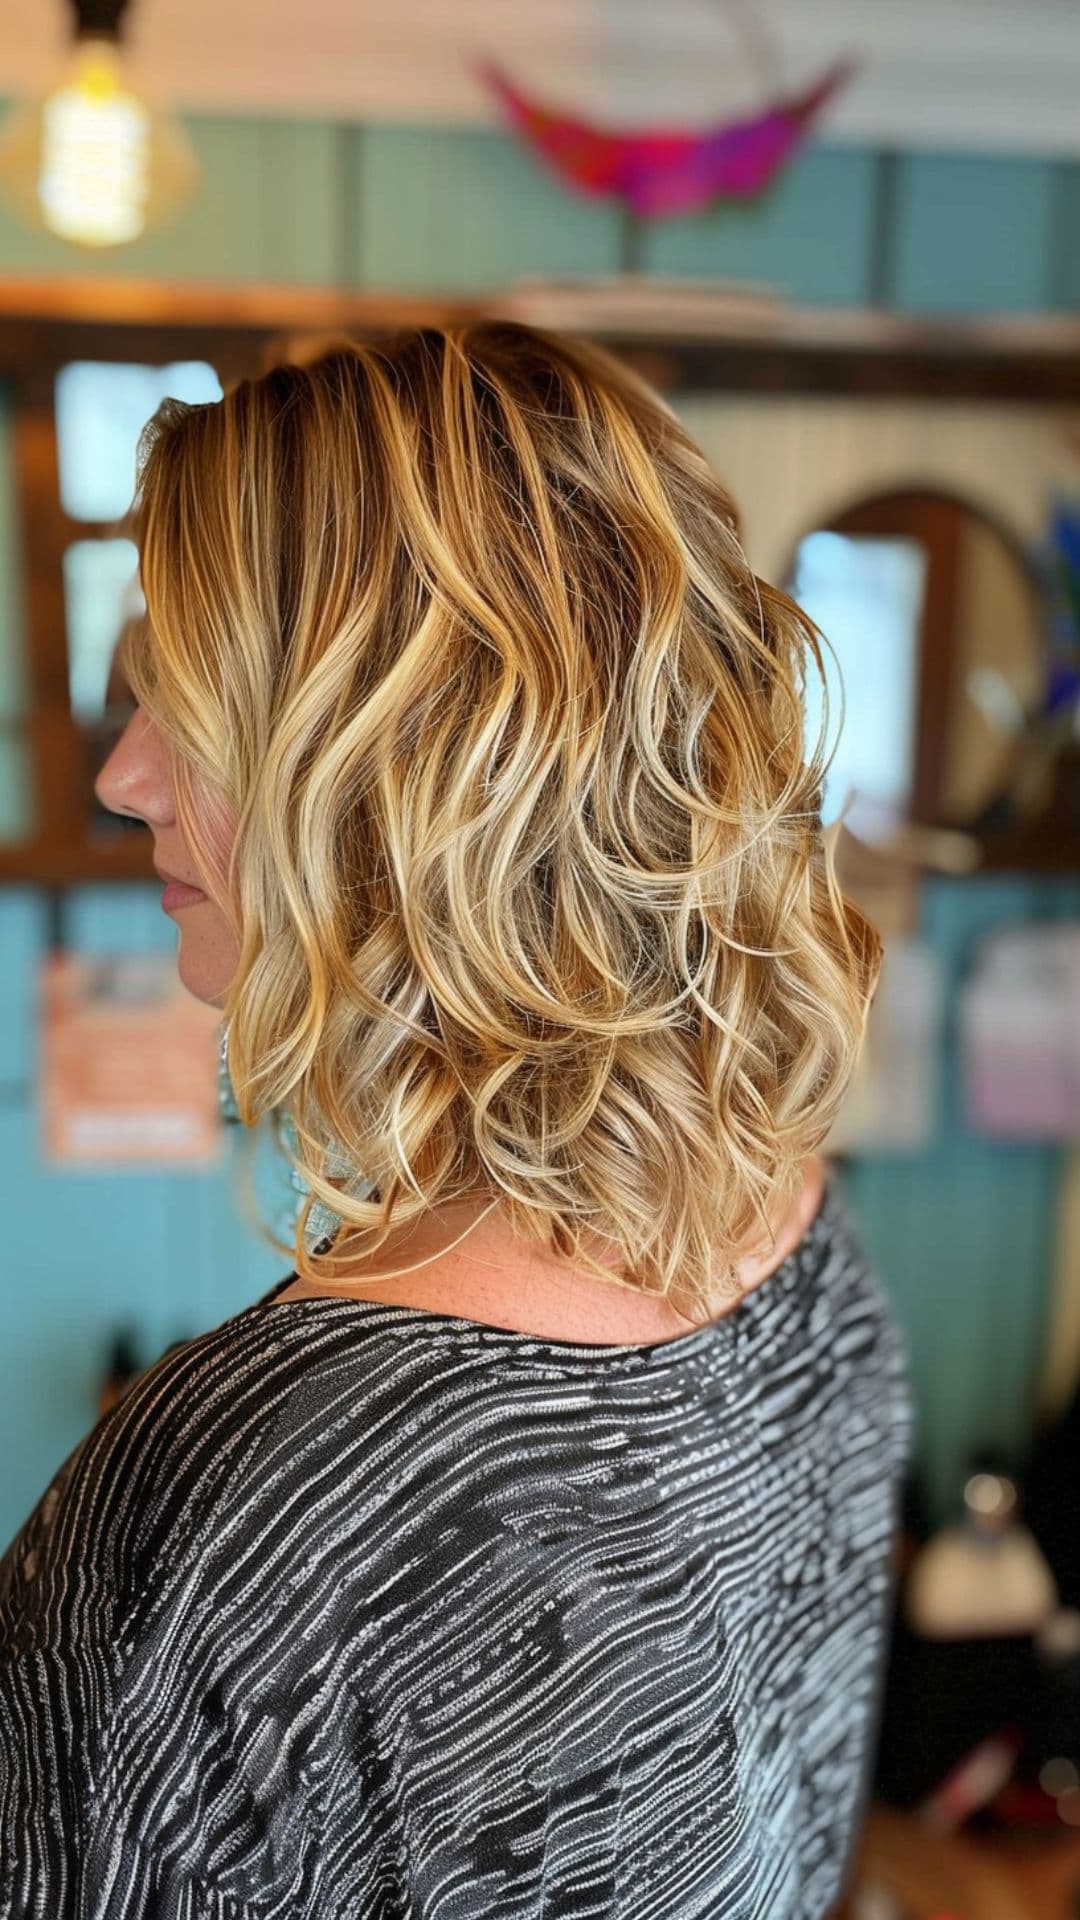 A woman modelling a honey blonde highlights hair.